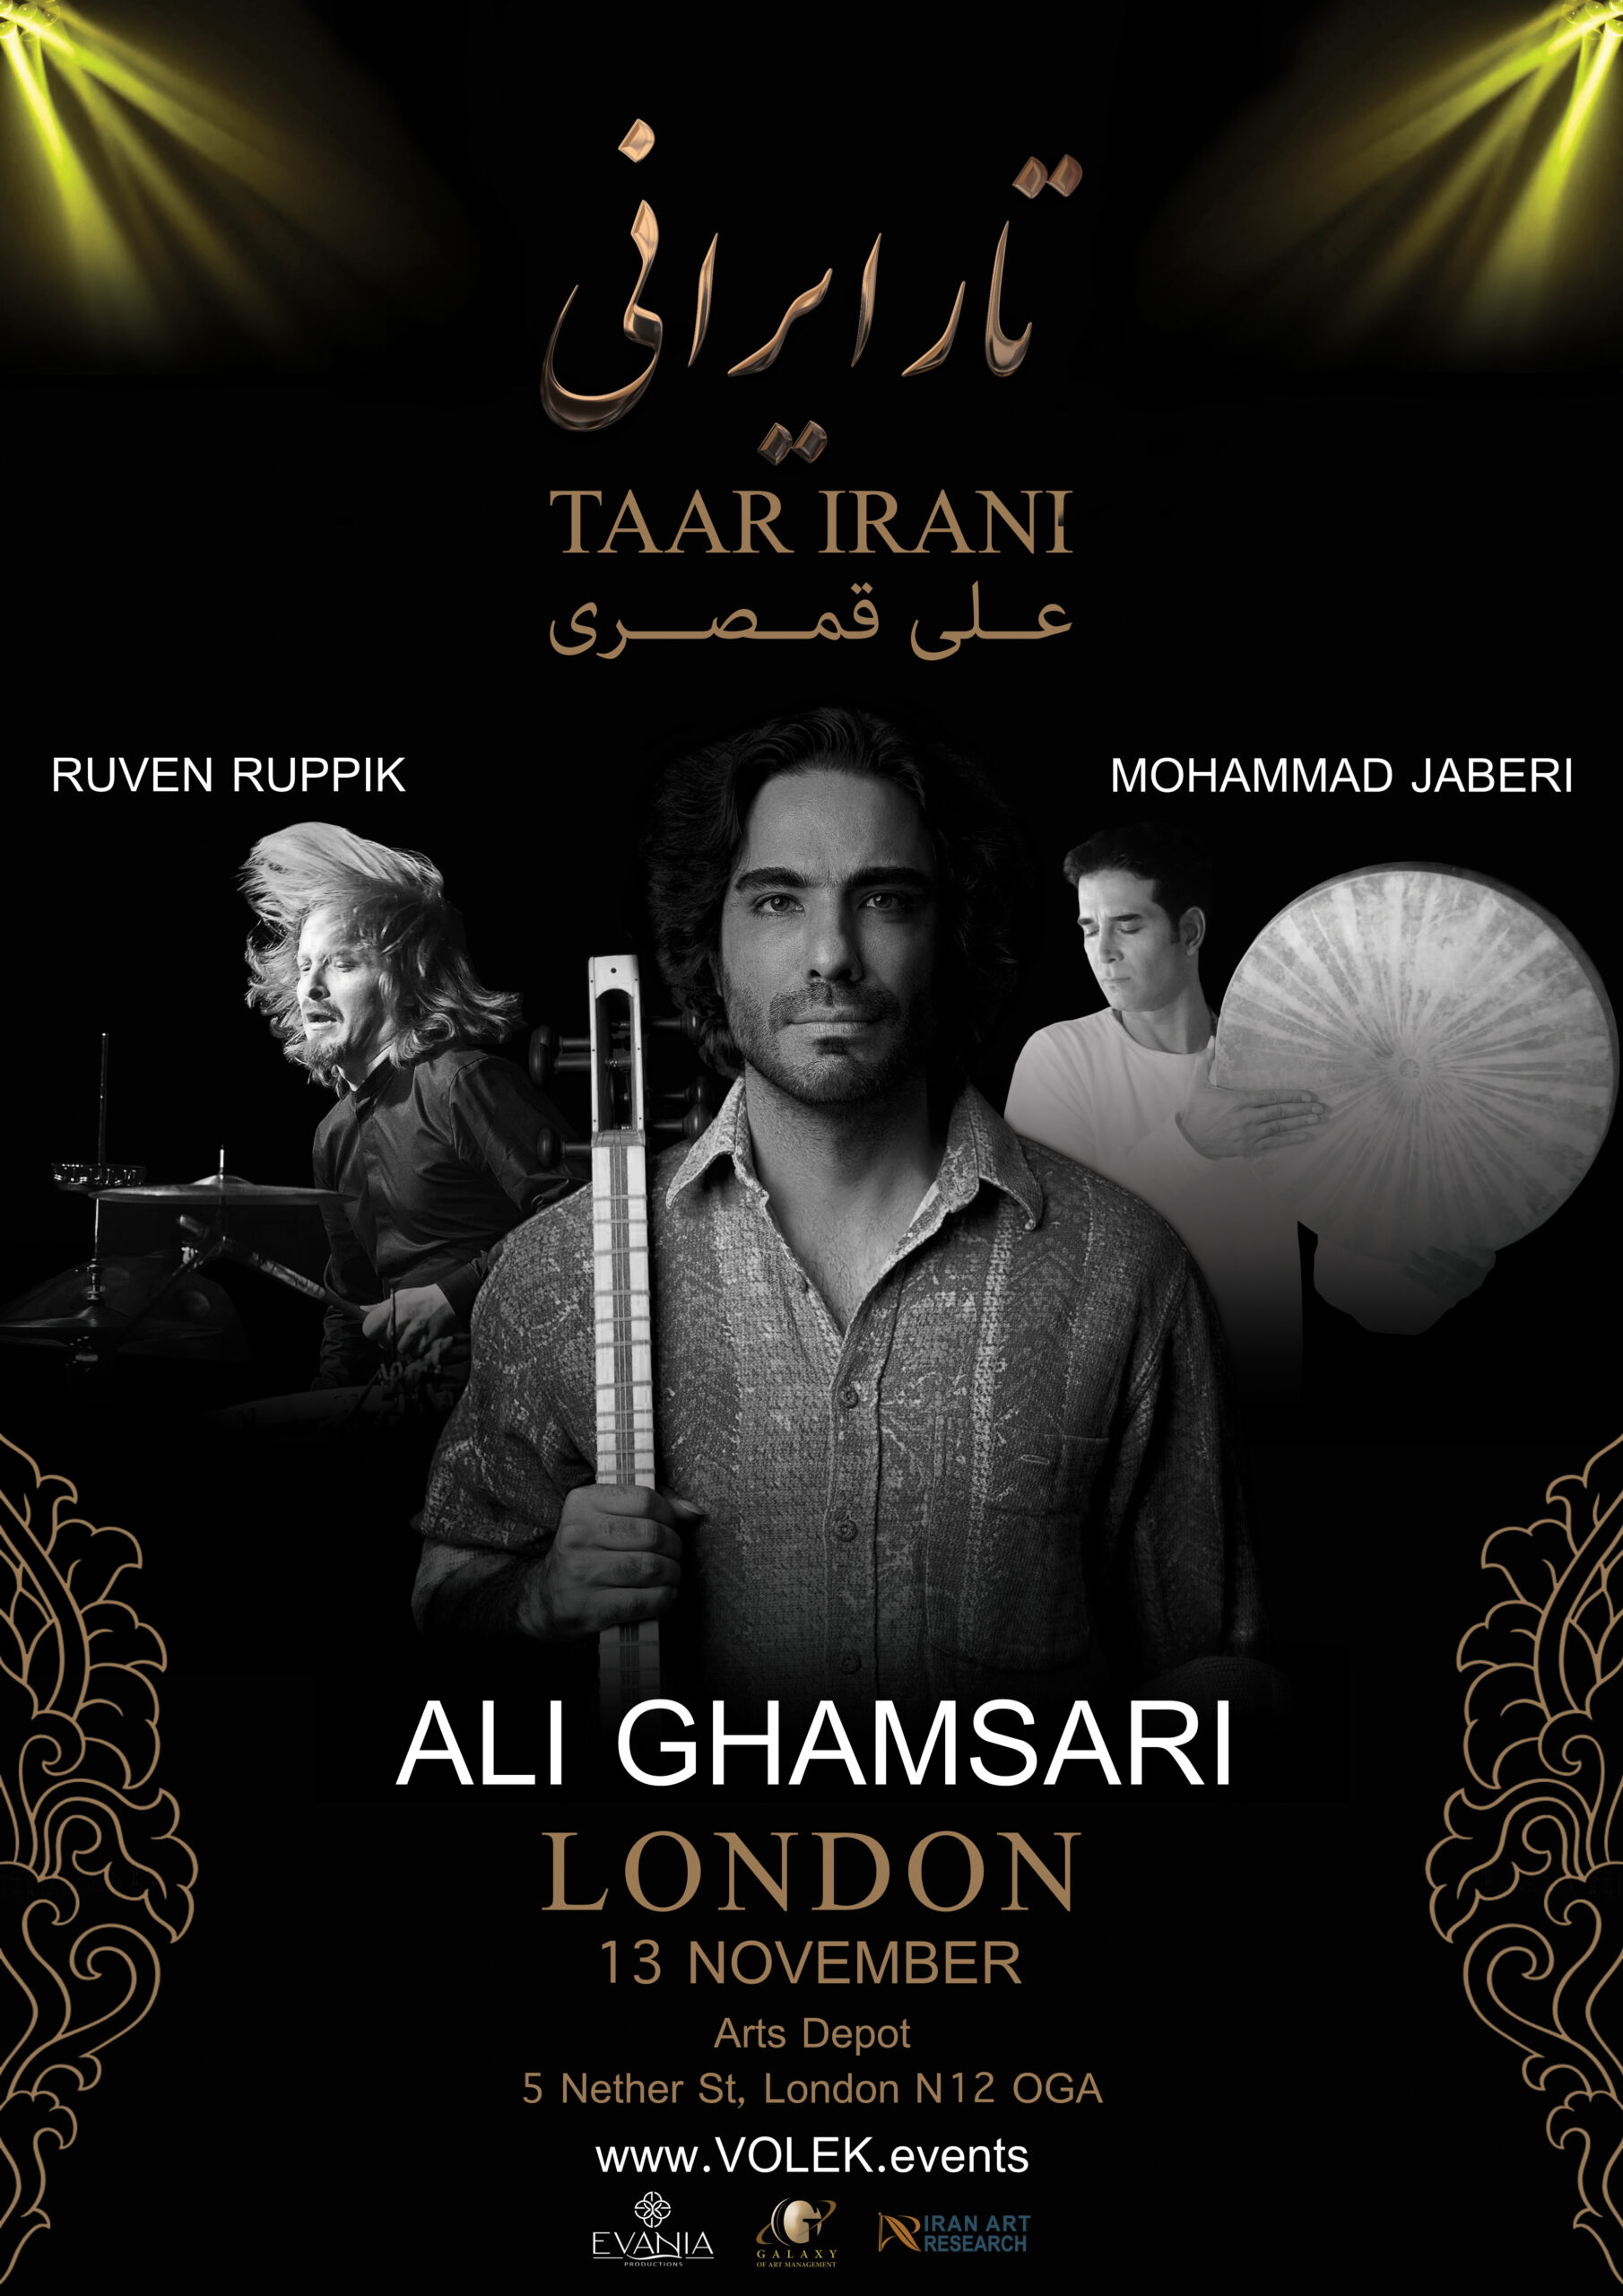 Ali Ghamsari – Taar Irani in London